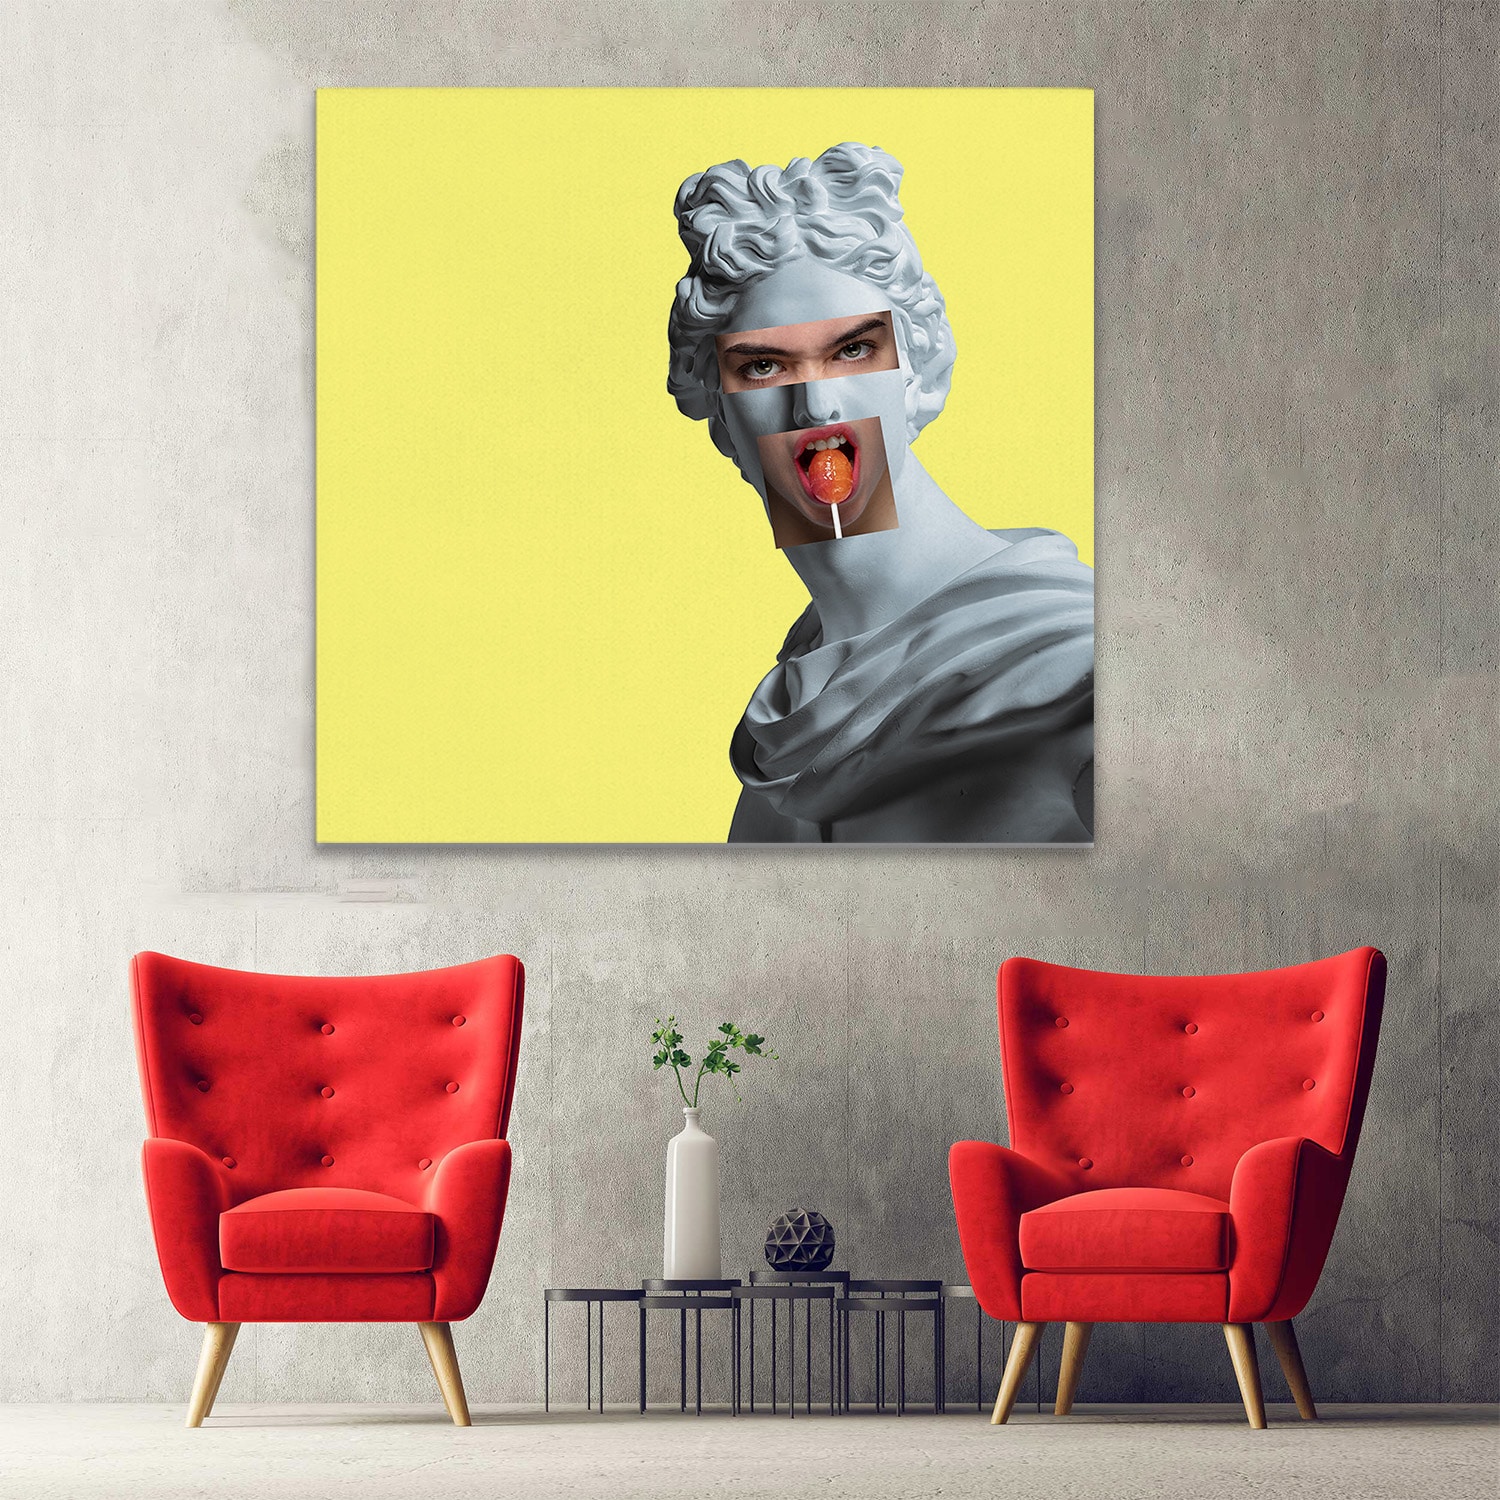 Tablou pop art colaj cap femeie in statuie, galben, gri 1401 - Material produs:: Poster pe hartie FARA RAMA, Dimensiunea:: 100x100 cm